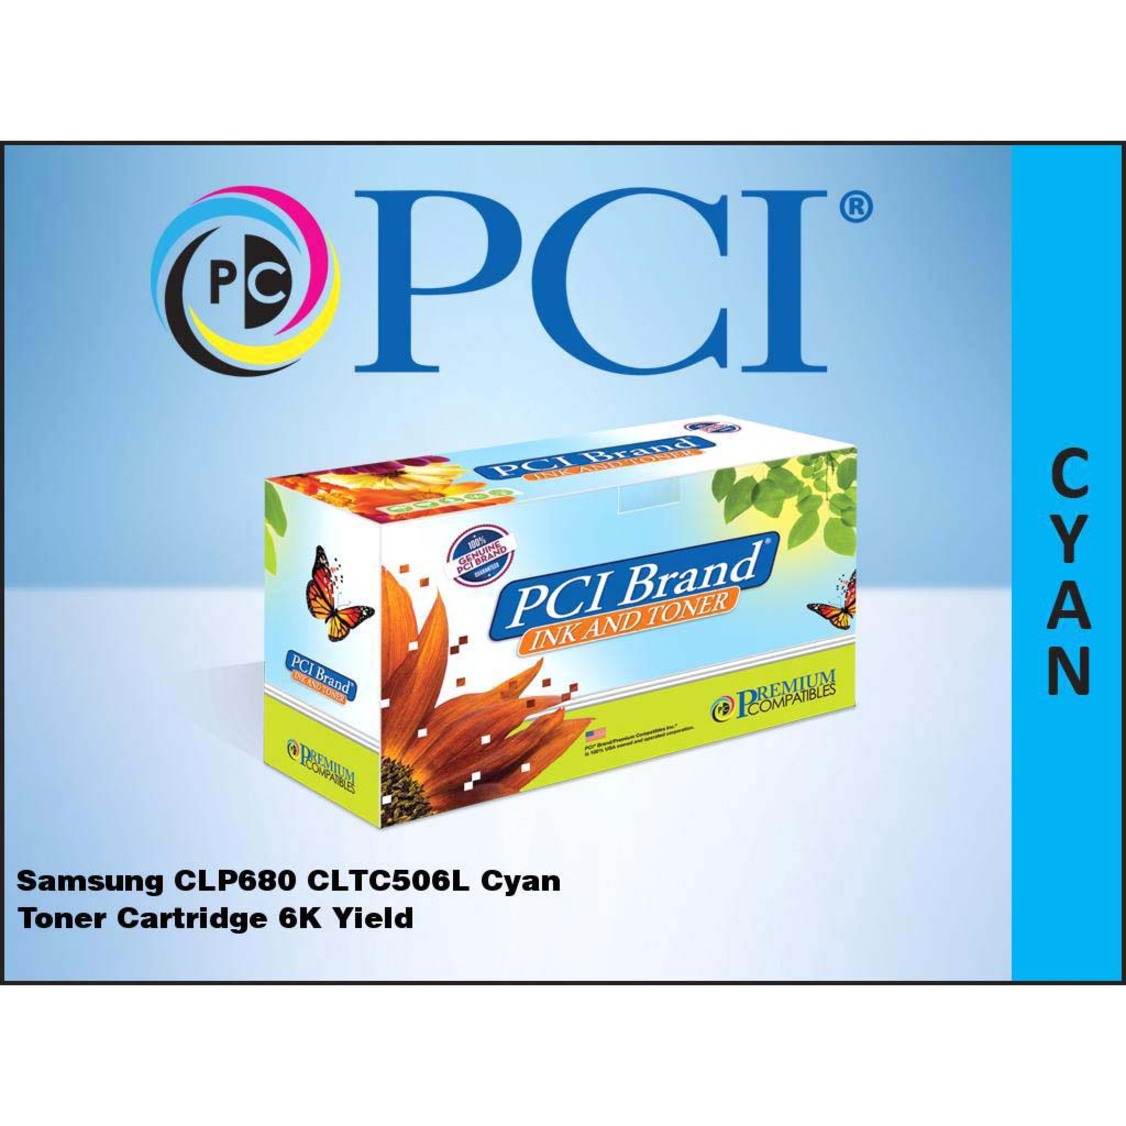 Premium Compatibles CLTC506L-PCI Samsung CLP680 CLTC506L Cyan Toner Ctg, Made in the USA